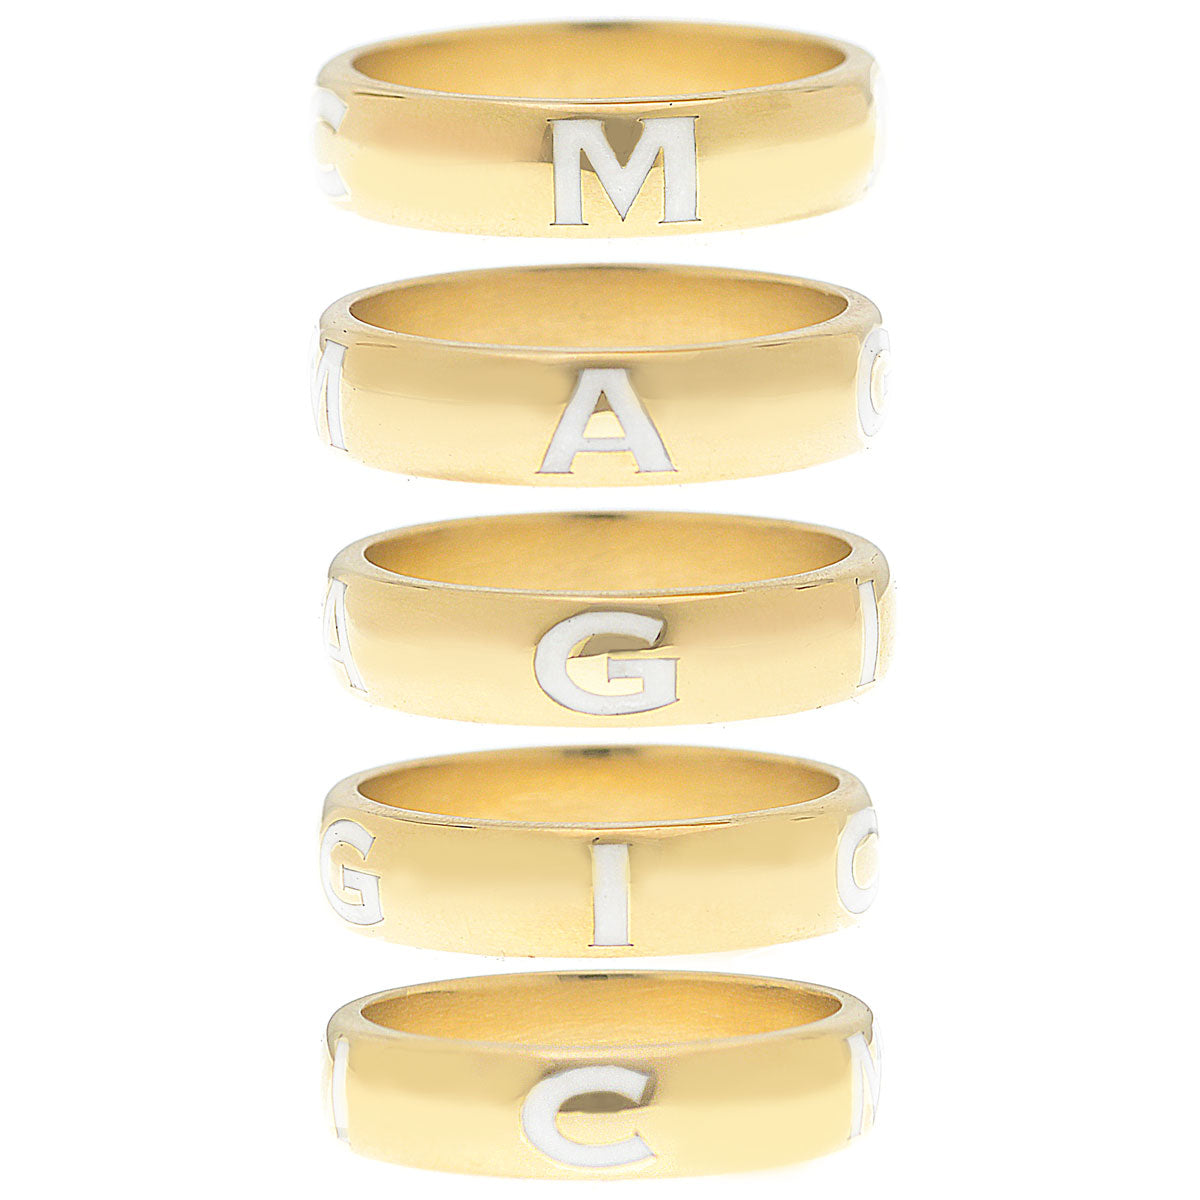 Magic Mantra Ring